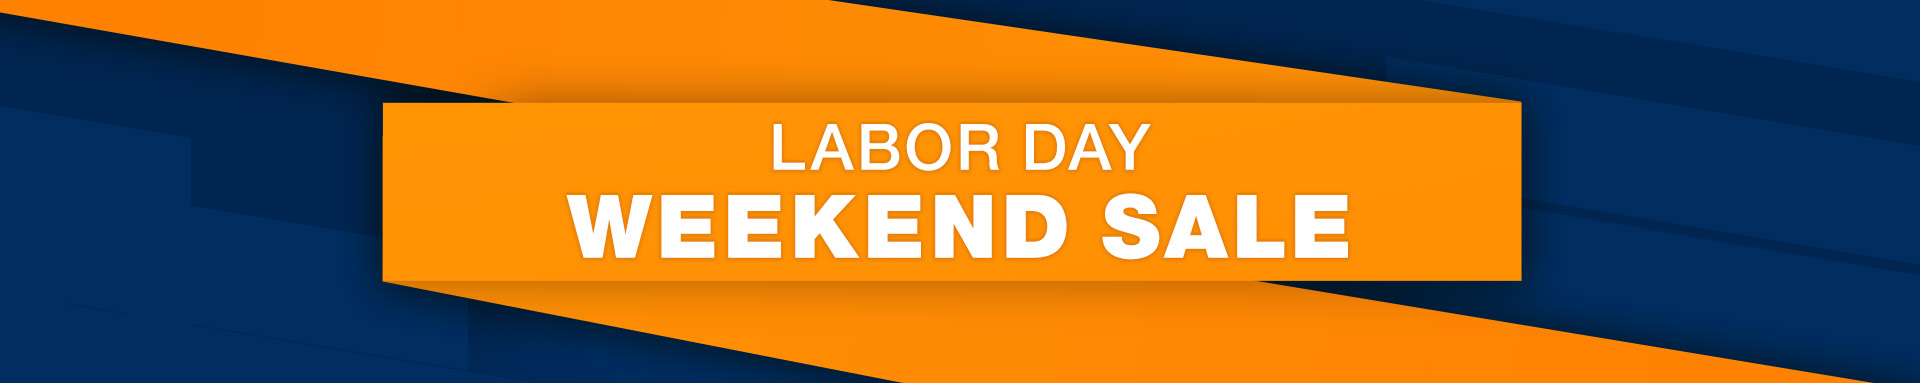 Labor Day Weekend Sale